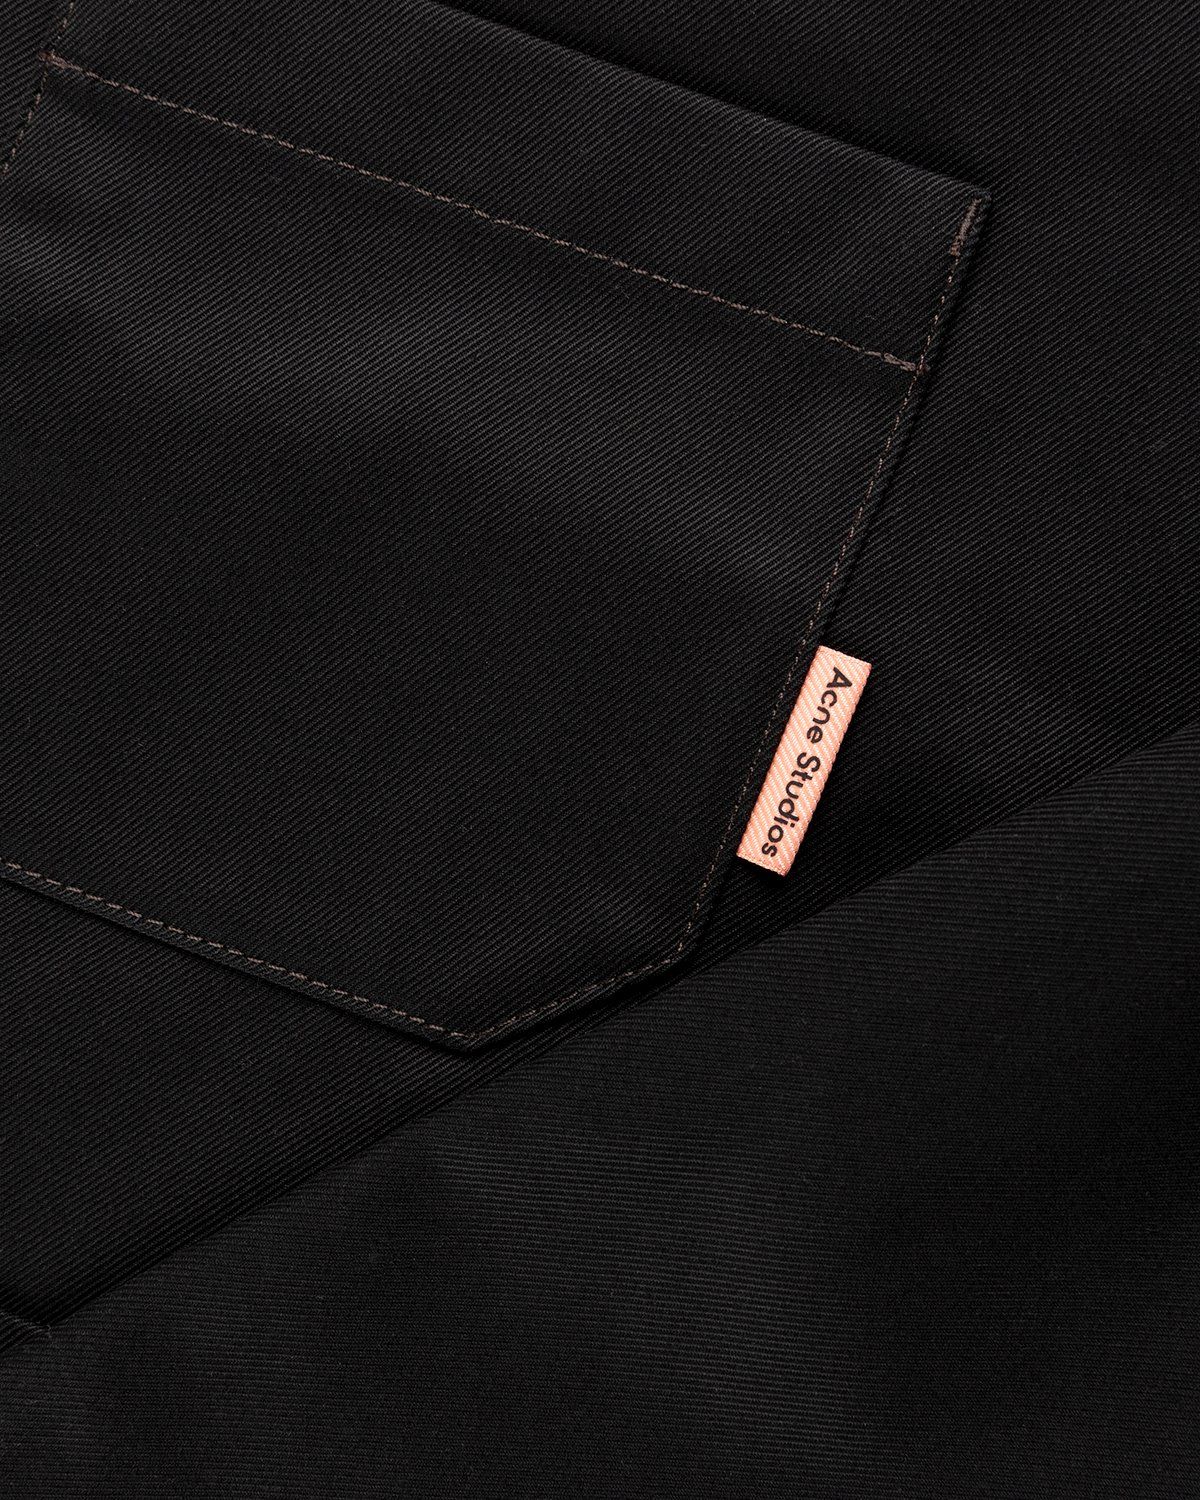 Acne Studios – Cotton Twill Jacket Black - Jackets - Black - Image 6